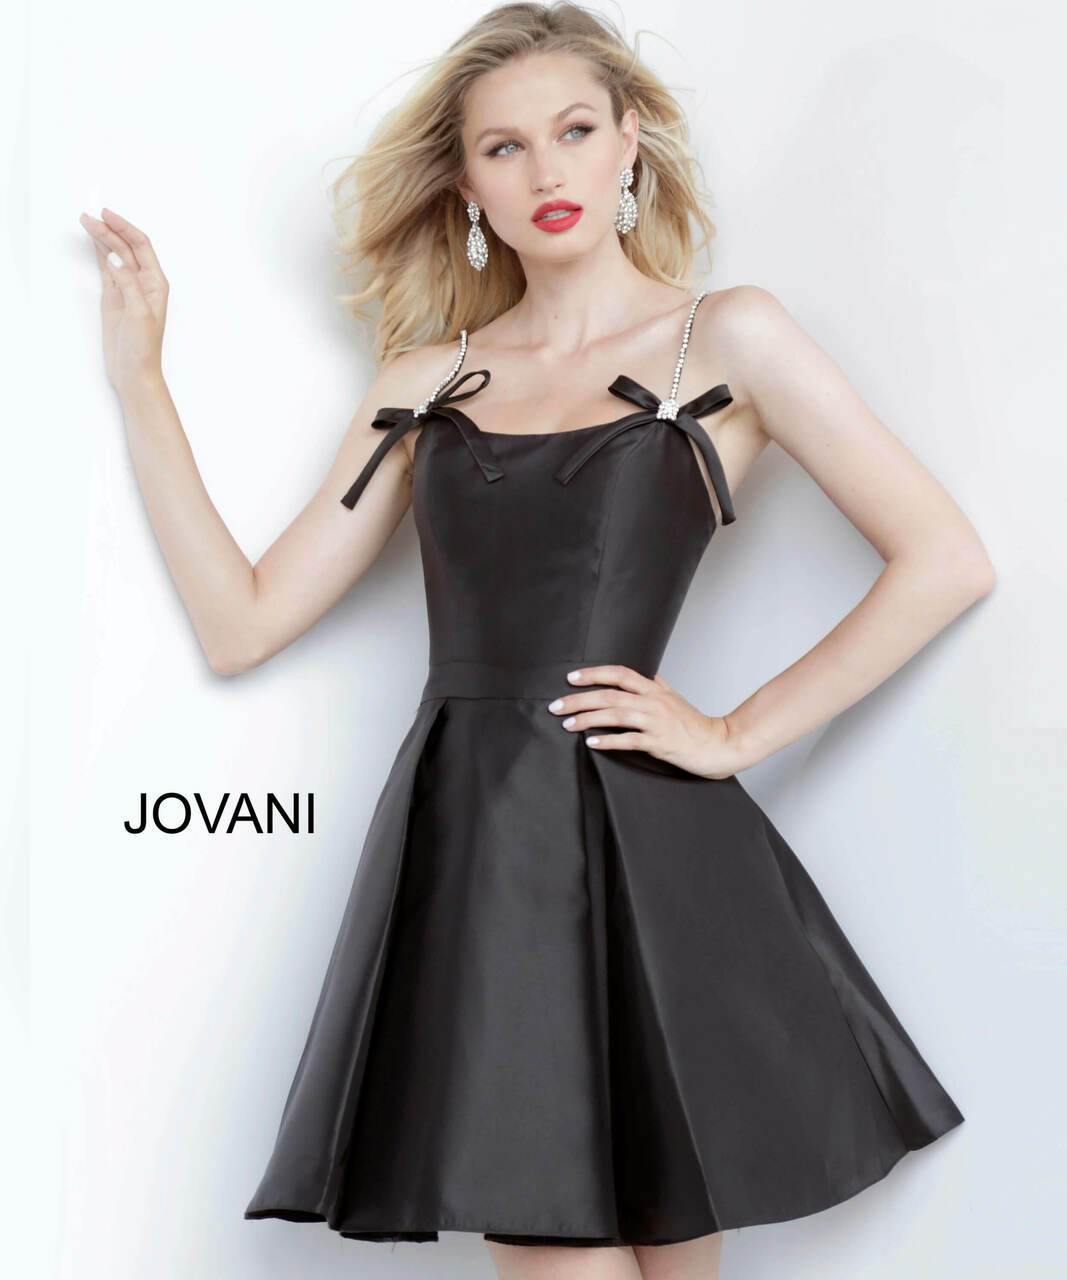 Jovani Short Spaghetti Strap Cocktail Dress 00198 - The Dress Outlet